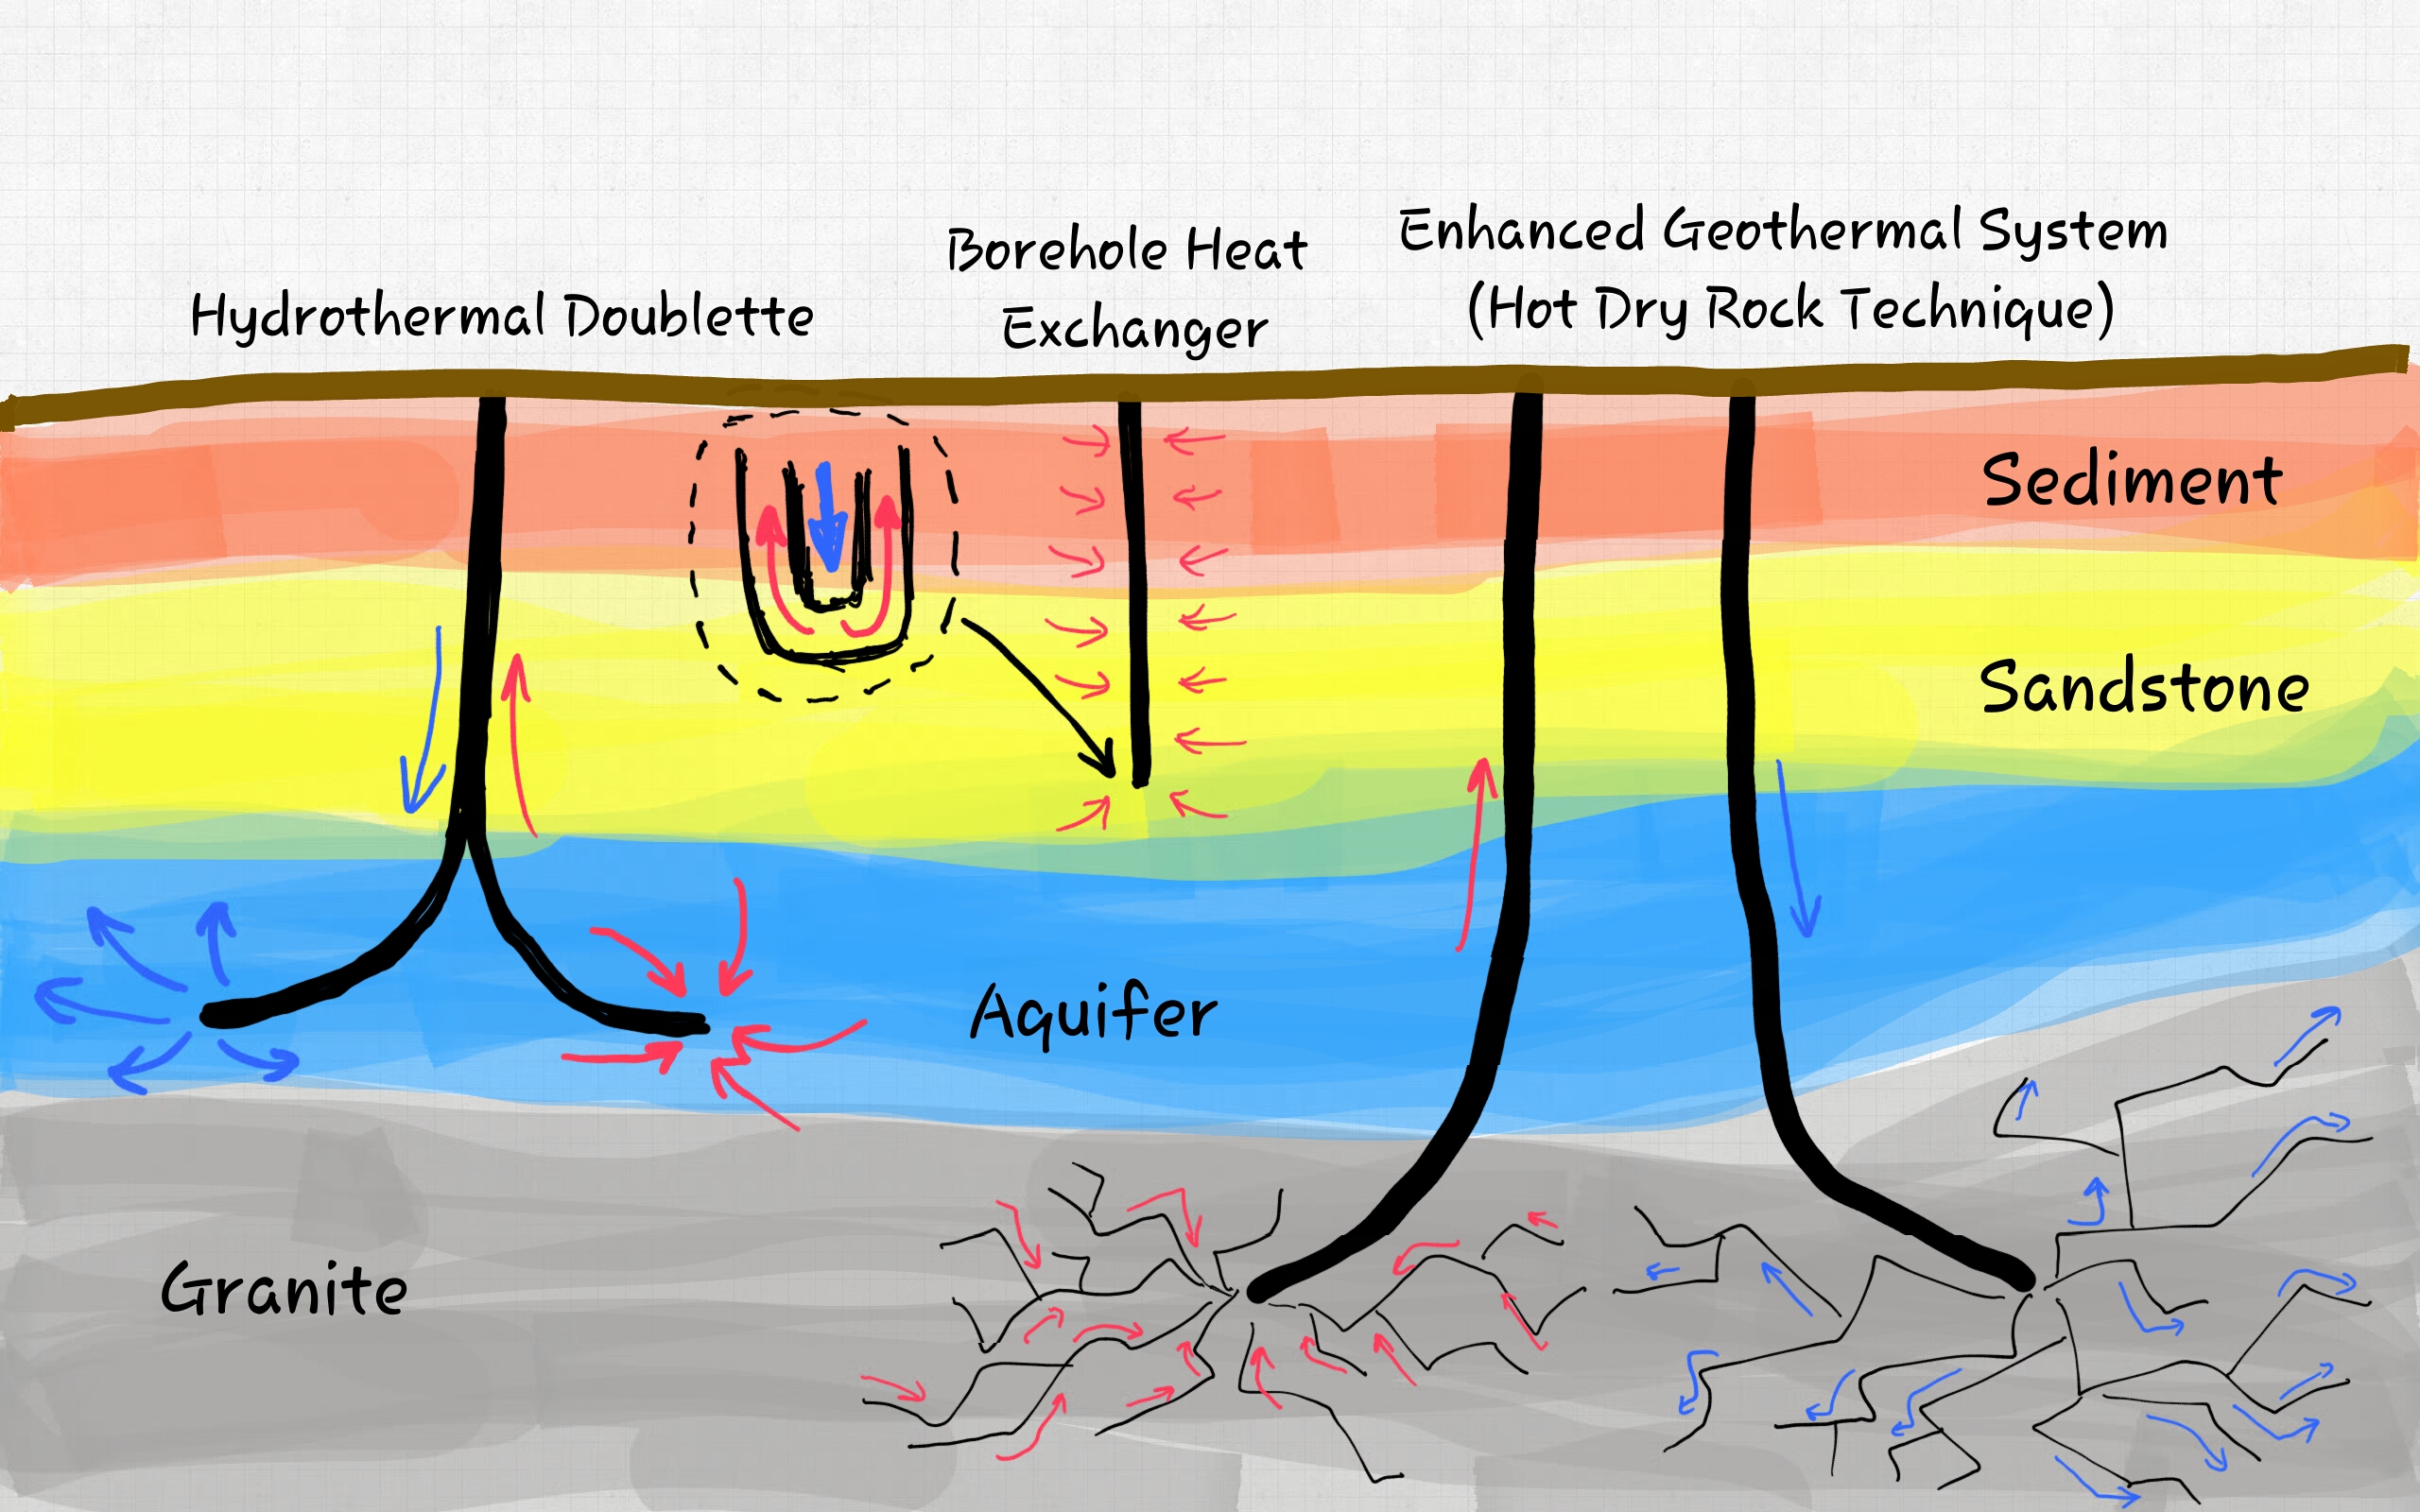 Geothermal heat extraction methods